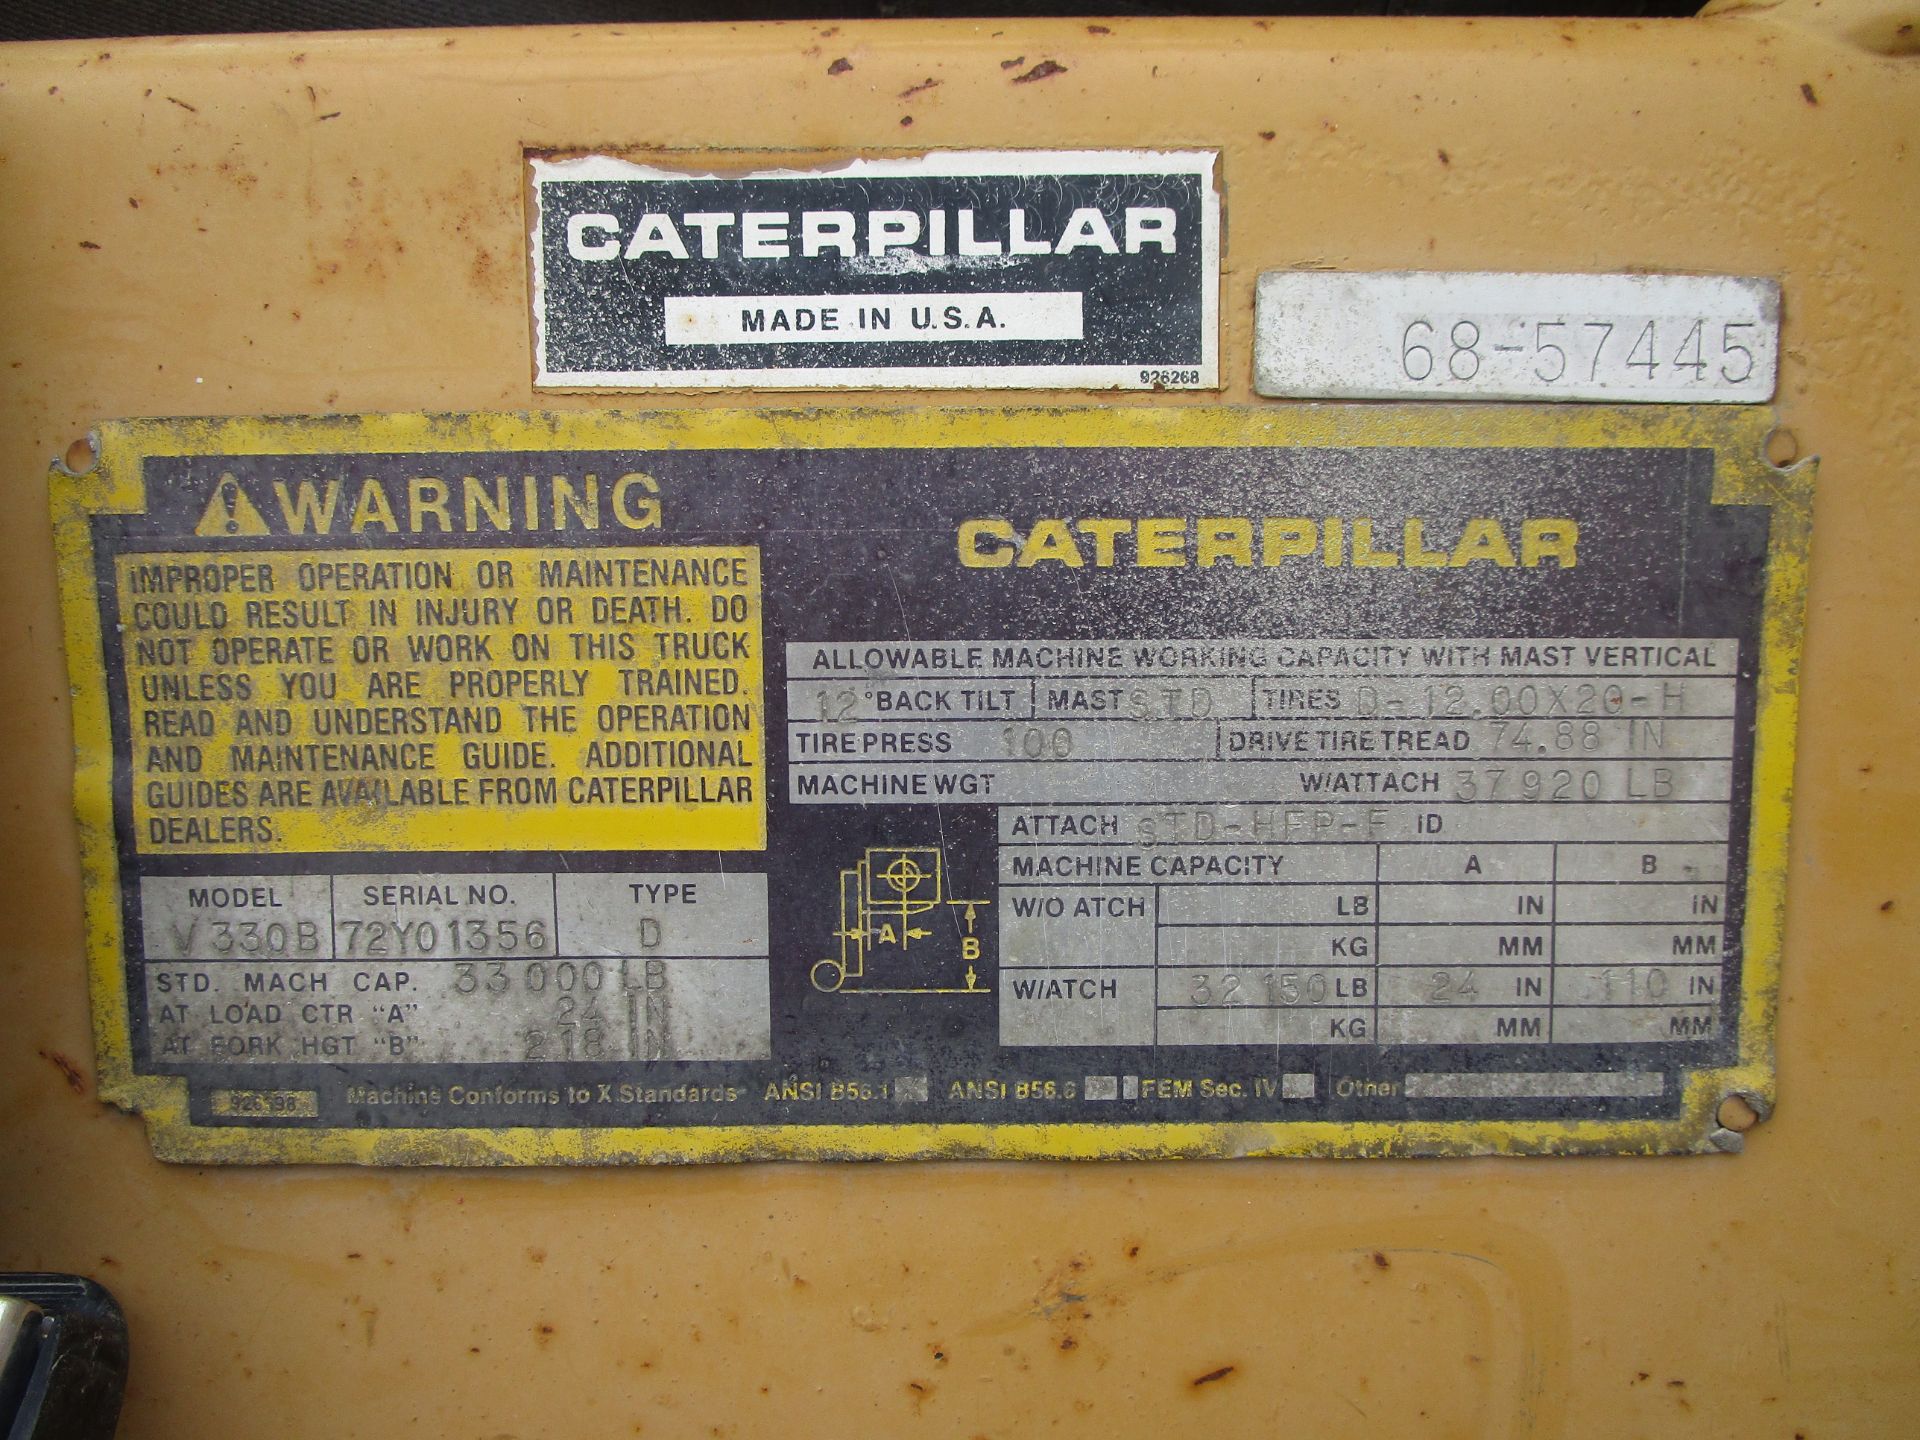 Caterpillar V330B 33,000 lb Forklift - Image 9 of 9